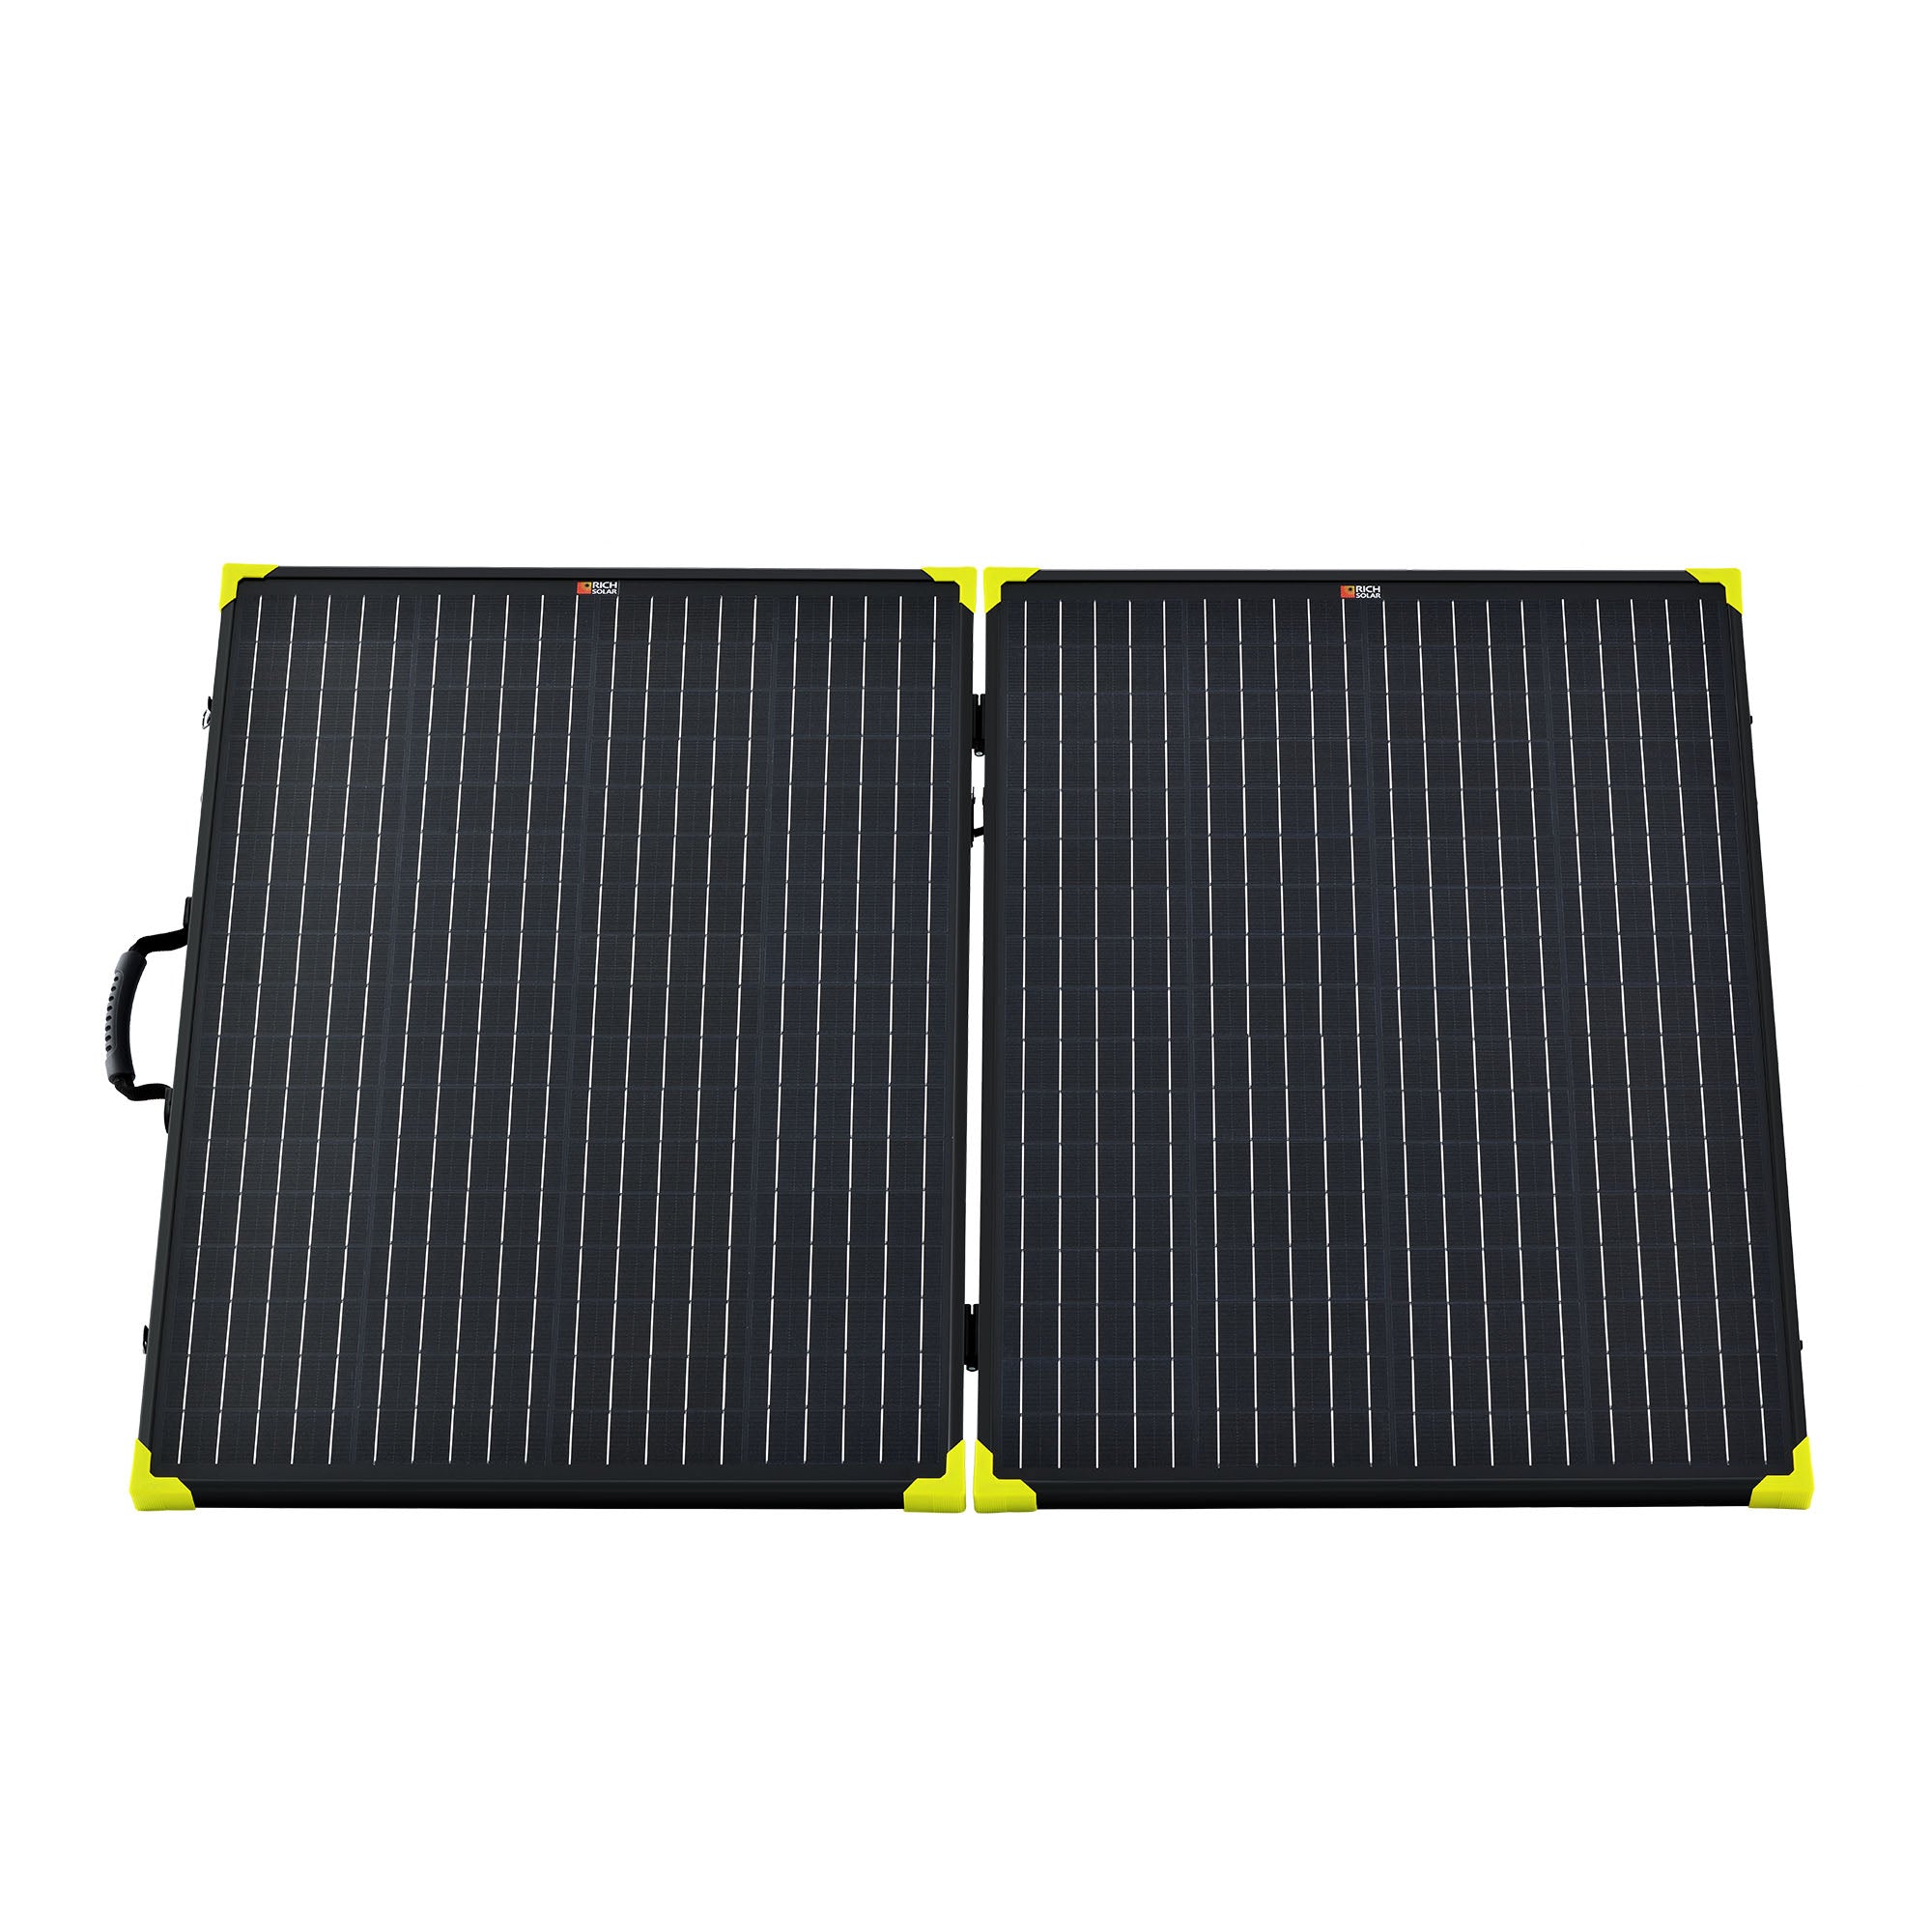 RICH SOLAR MEGA 200 Watt Portable Solar Panel Briefcase | Best 12V Panel for Solar Generators and Portable Power Stations - Solar Generators and Power Stations Plus